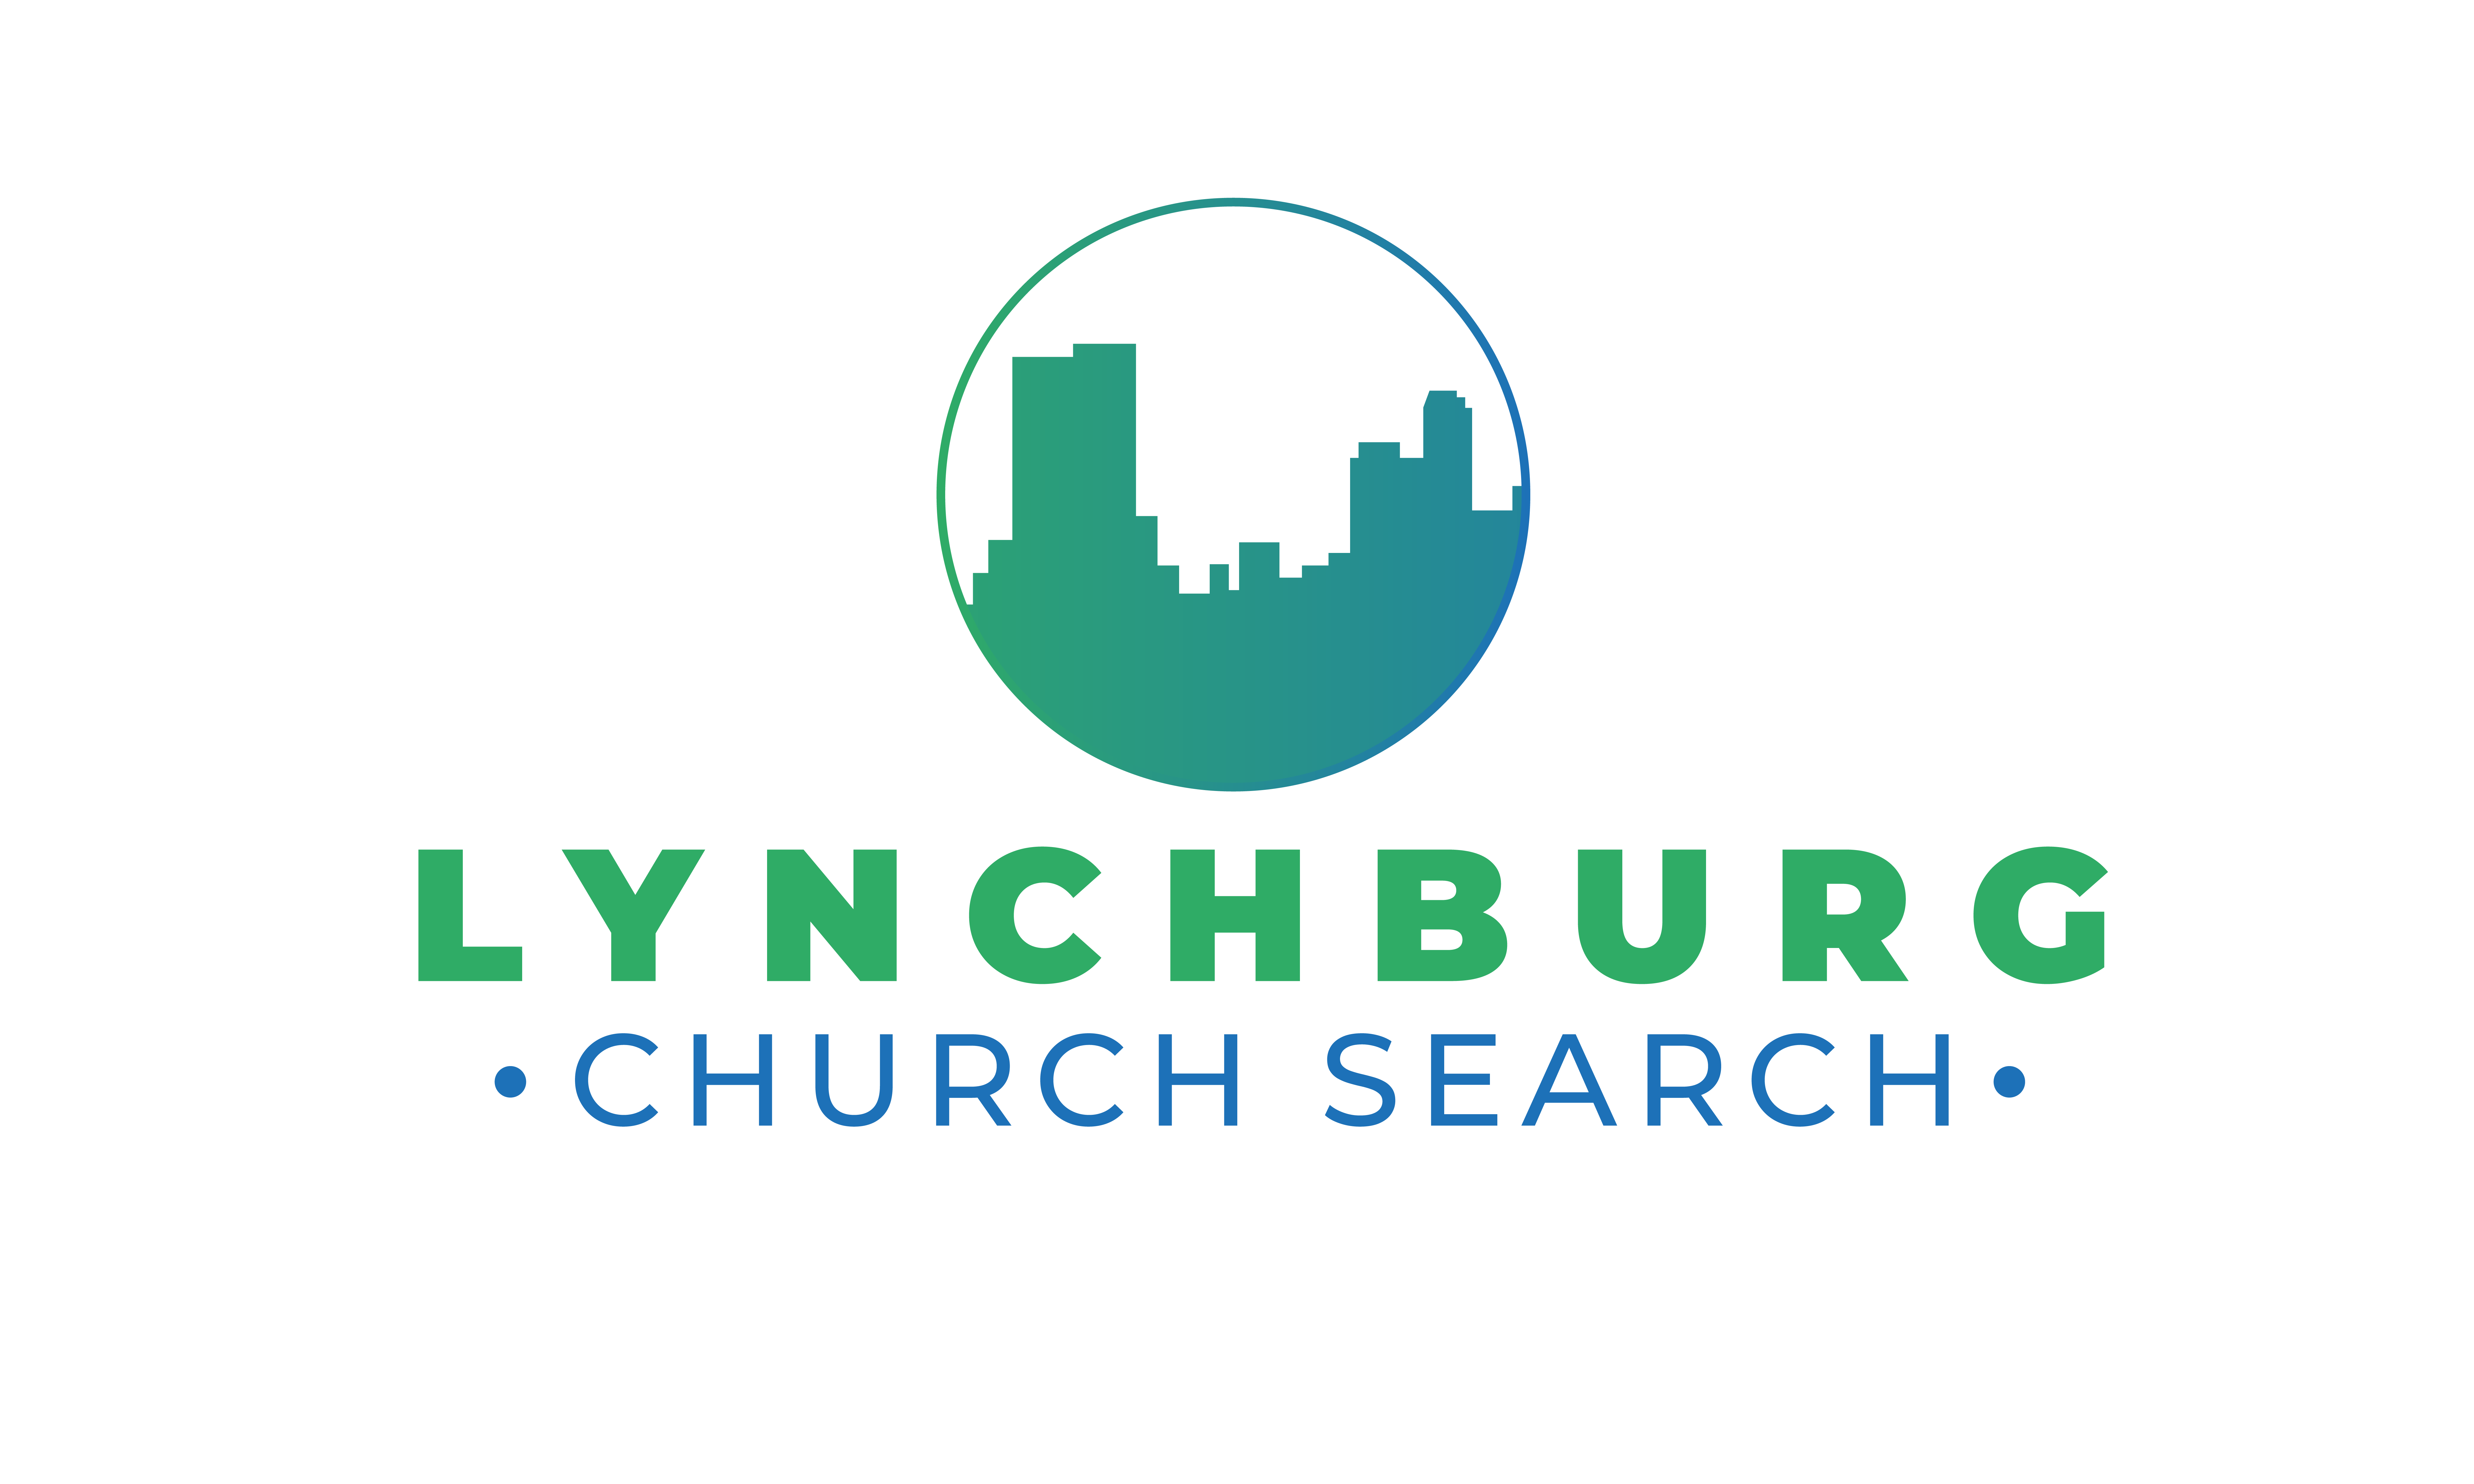 Lynchburg Church Search